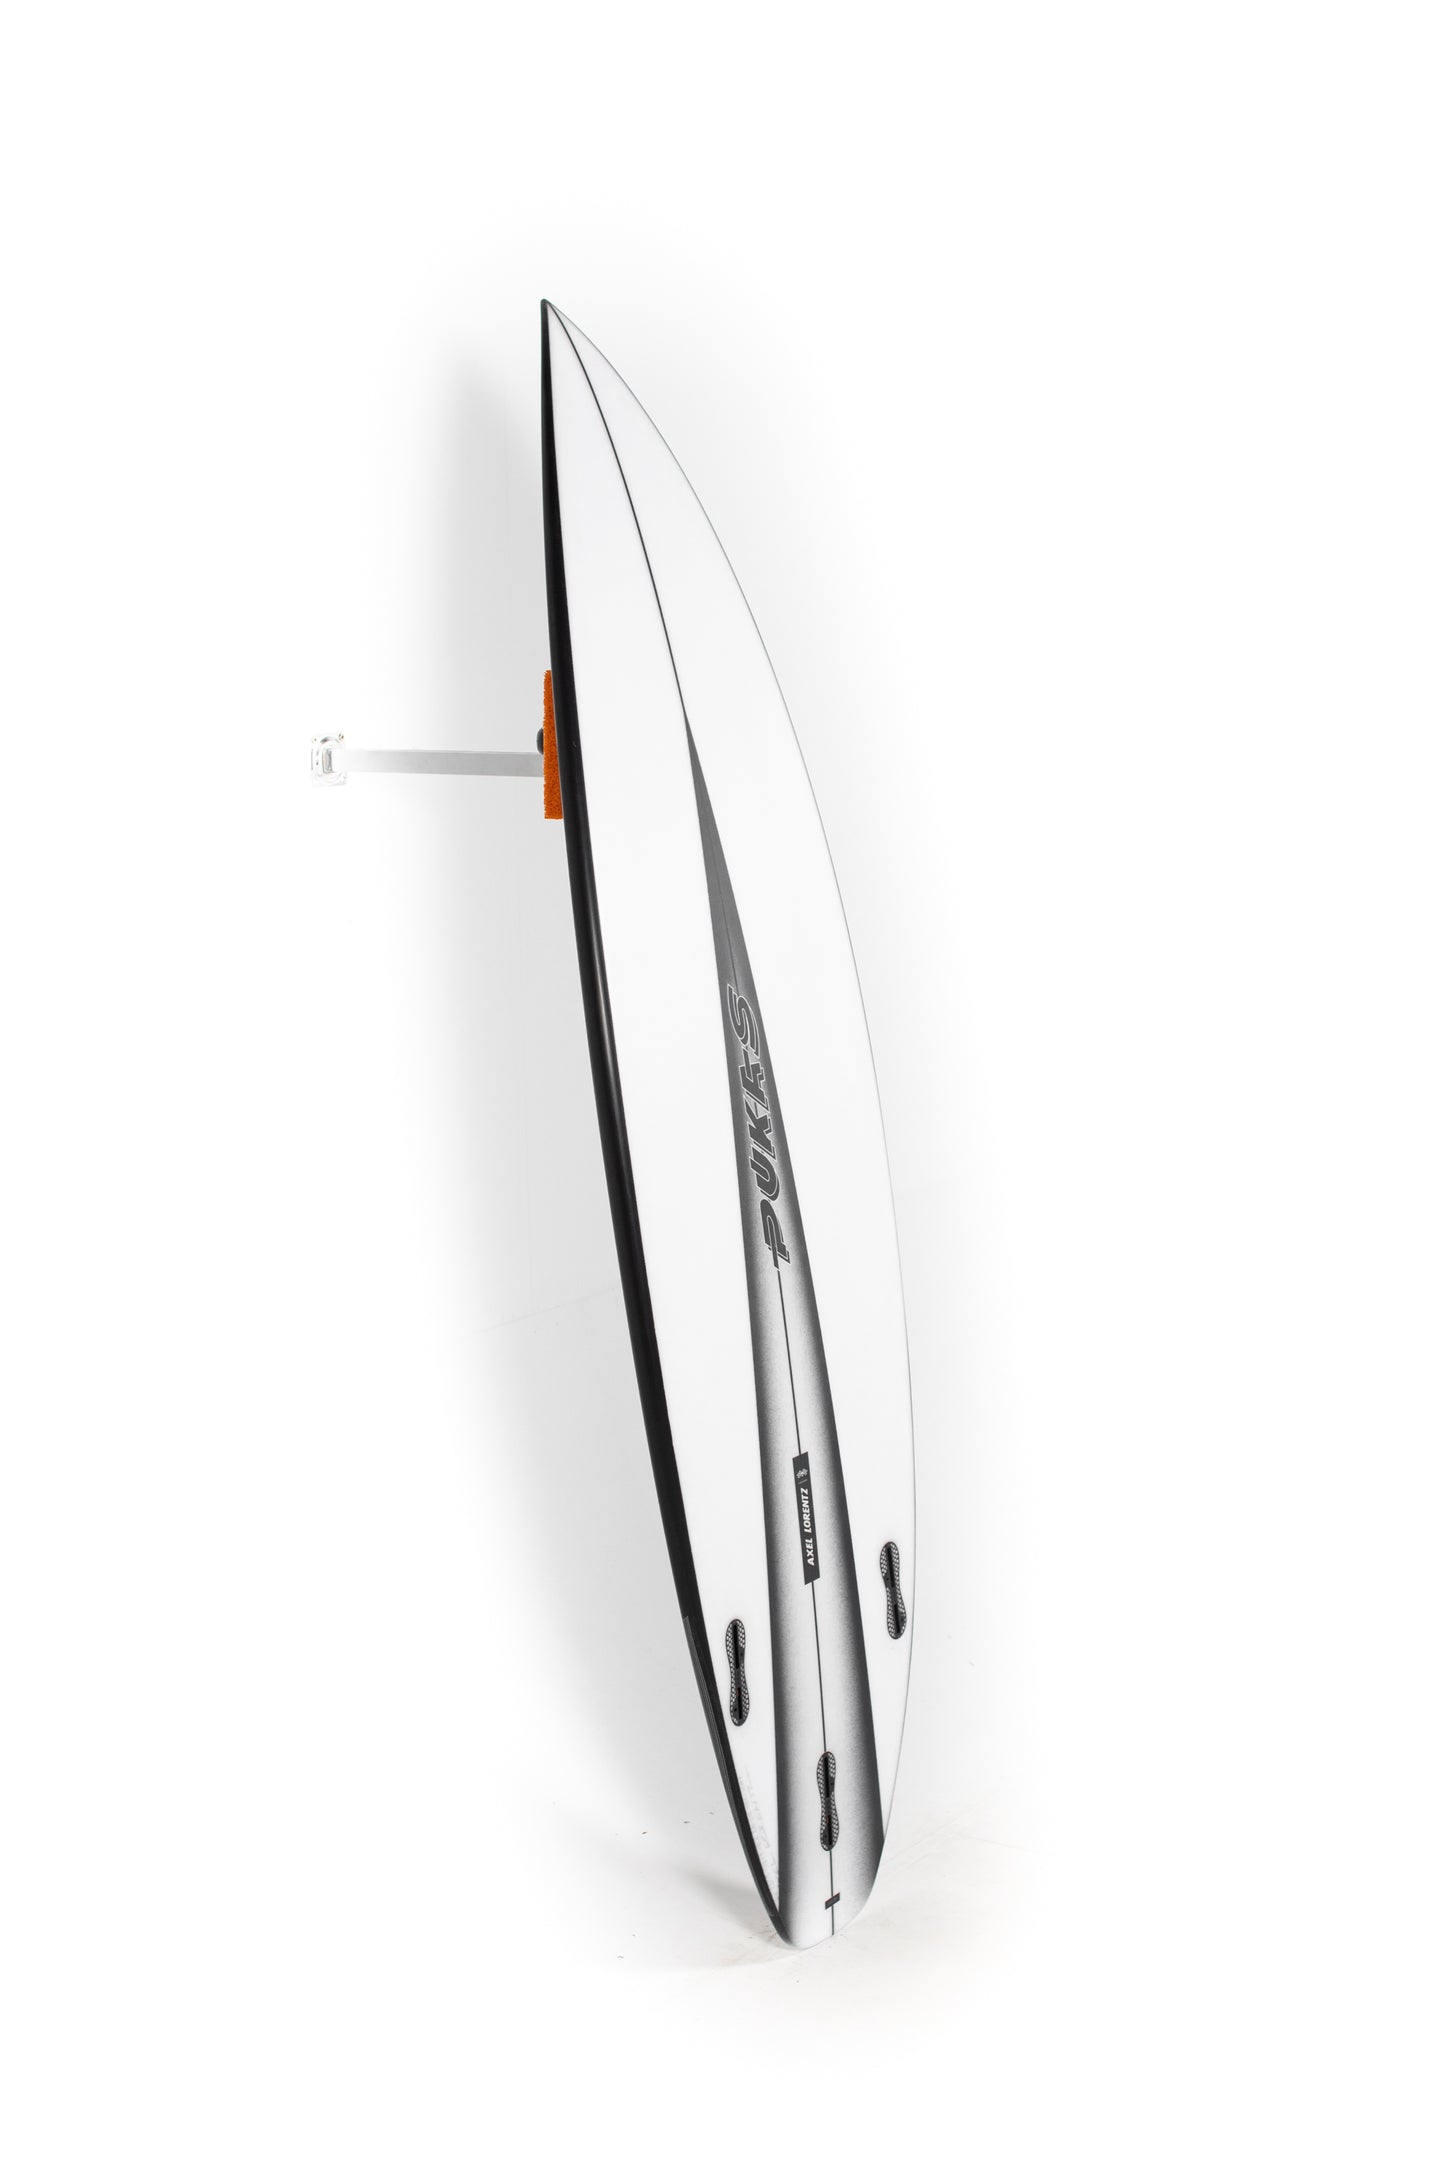 
                  
                    Pukas Surf Shop - Pukas Surfboard - DARKER by Axel Lorentz - 5'9" x 19,13 x 2,28 x 26,72L. - AX09205
                  
                